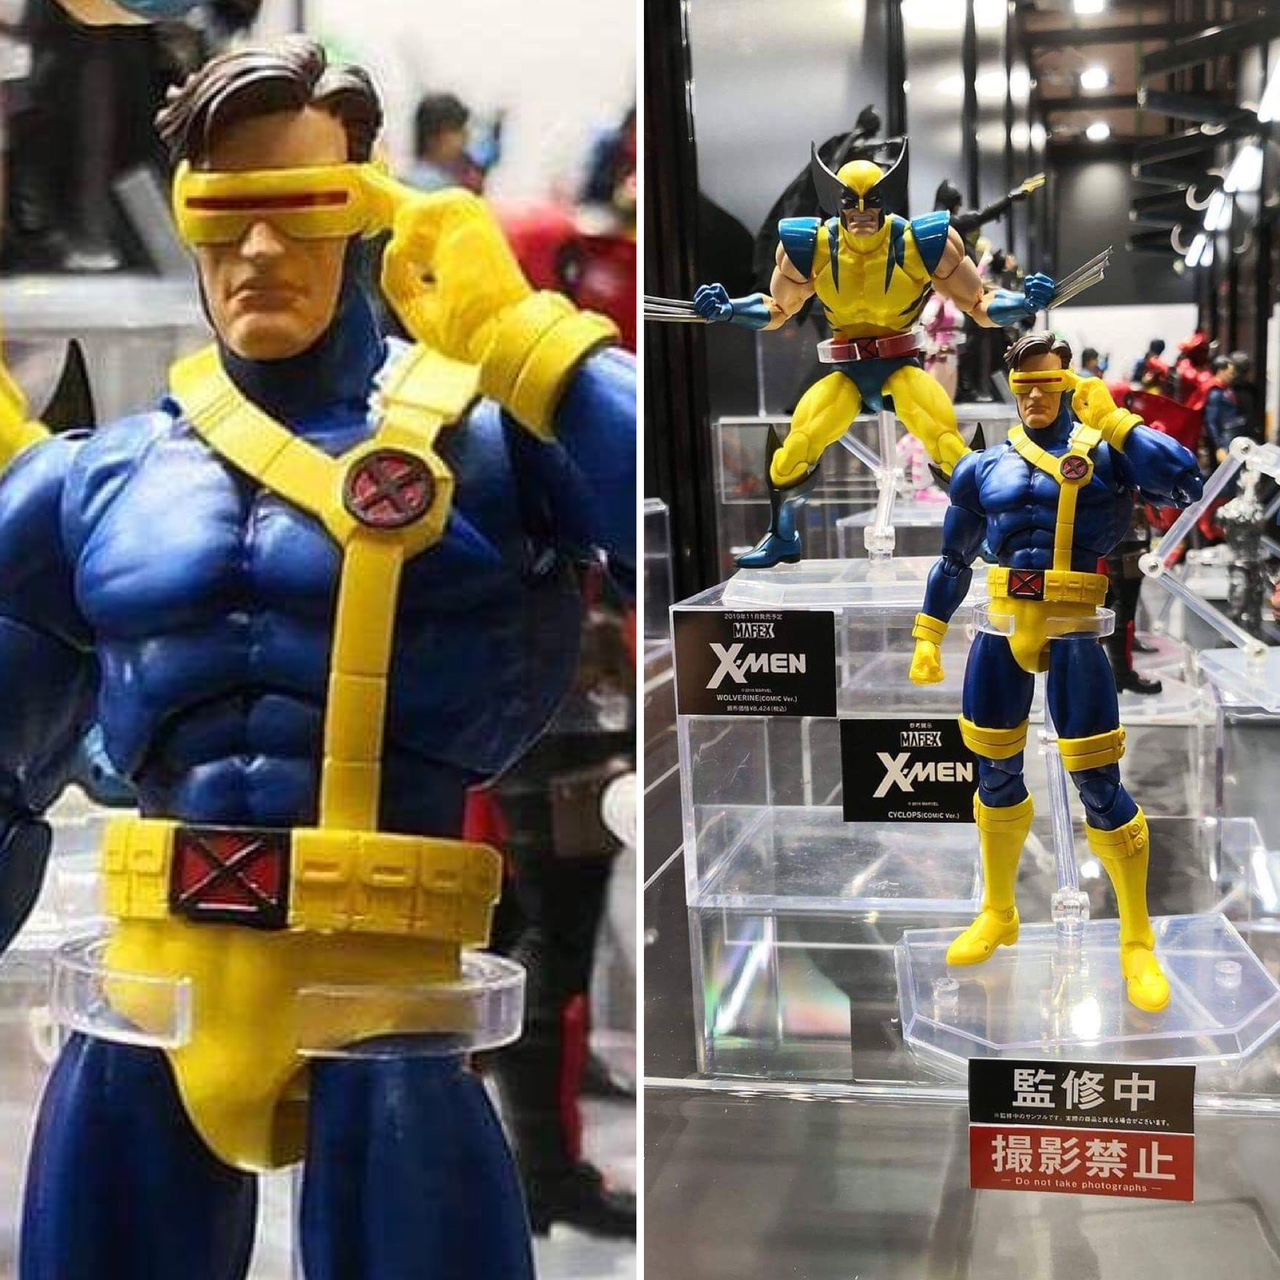 MAFEX Cyclops Jim Lee X-Men 6